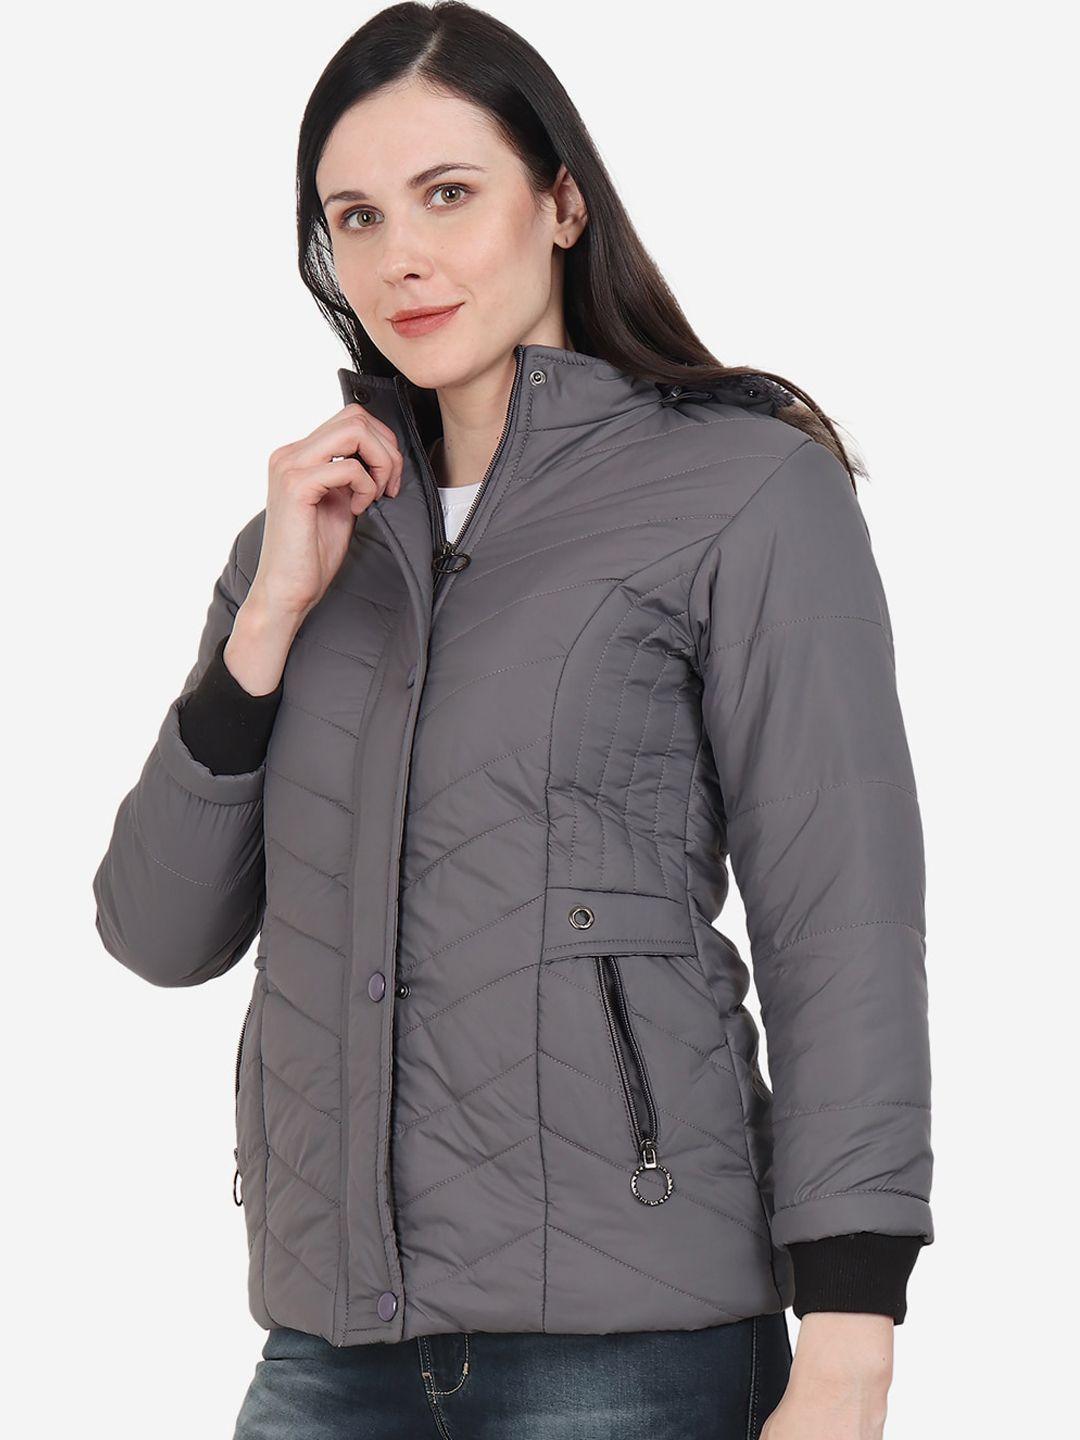 xohy women grey lightweight outdoor padded jacket